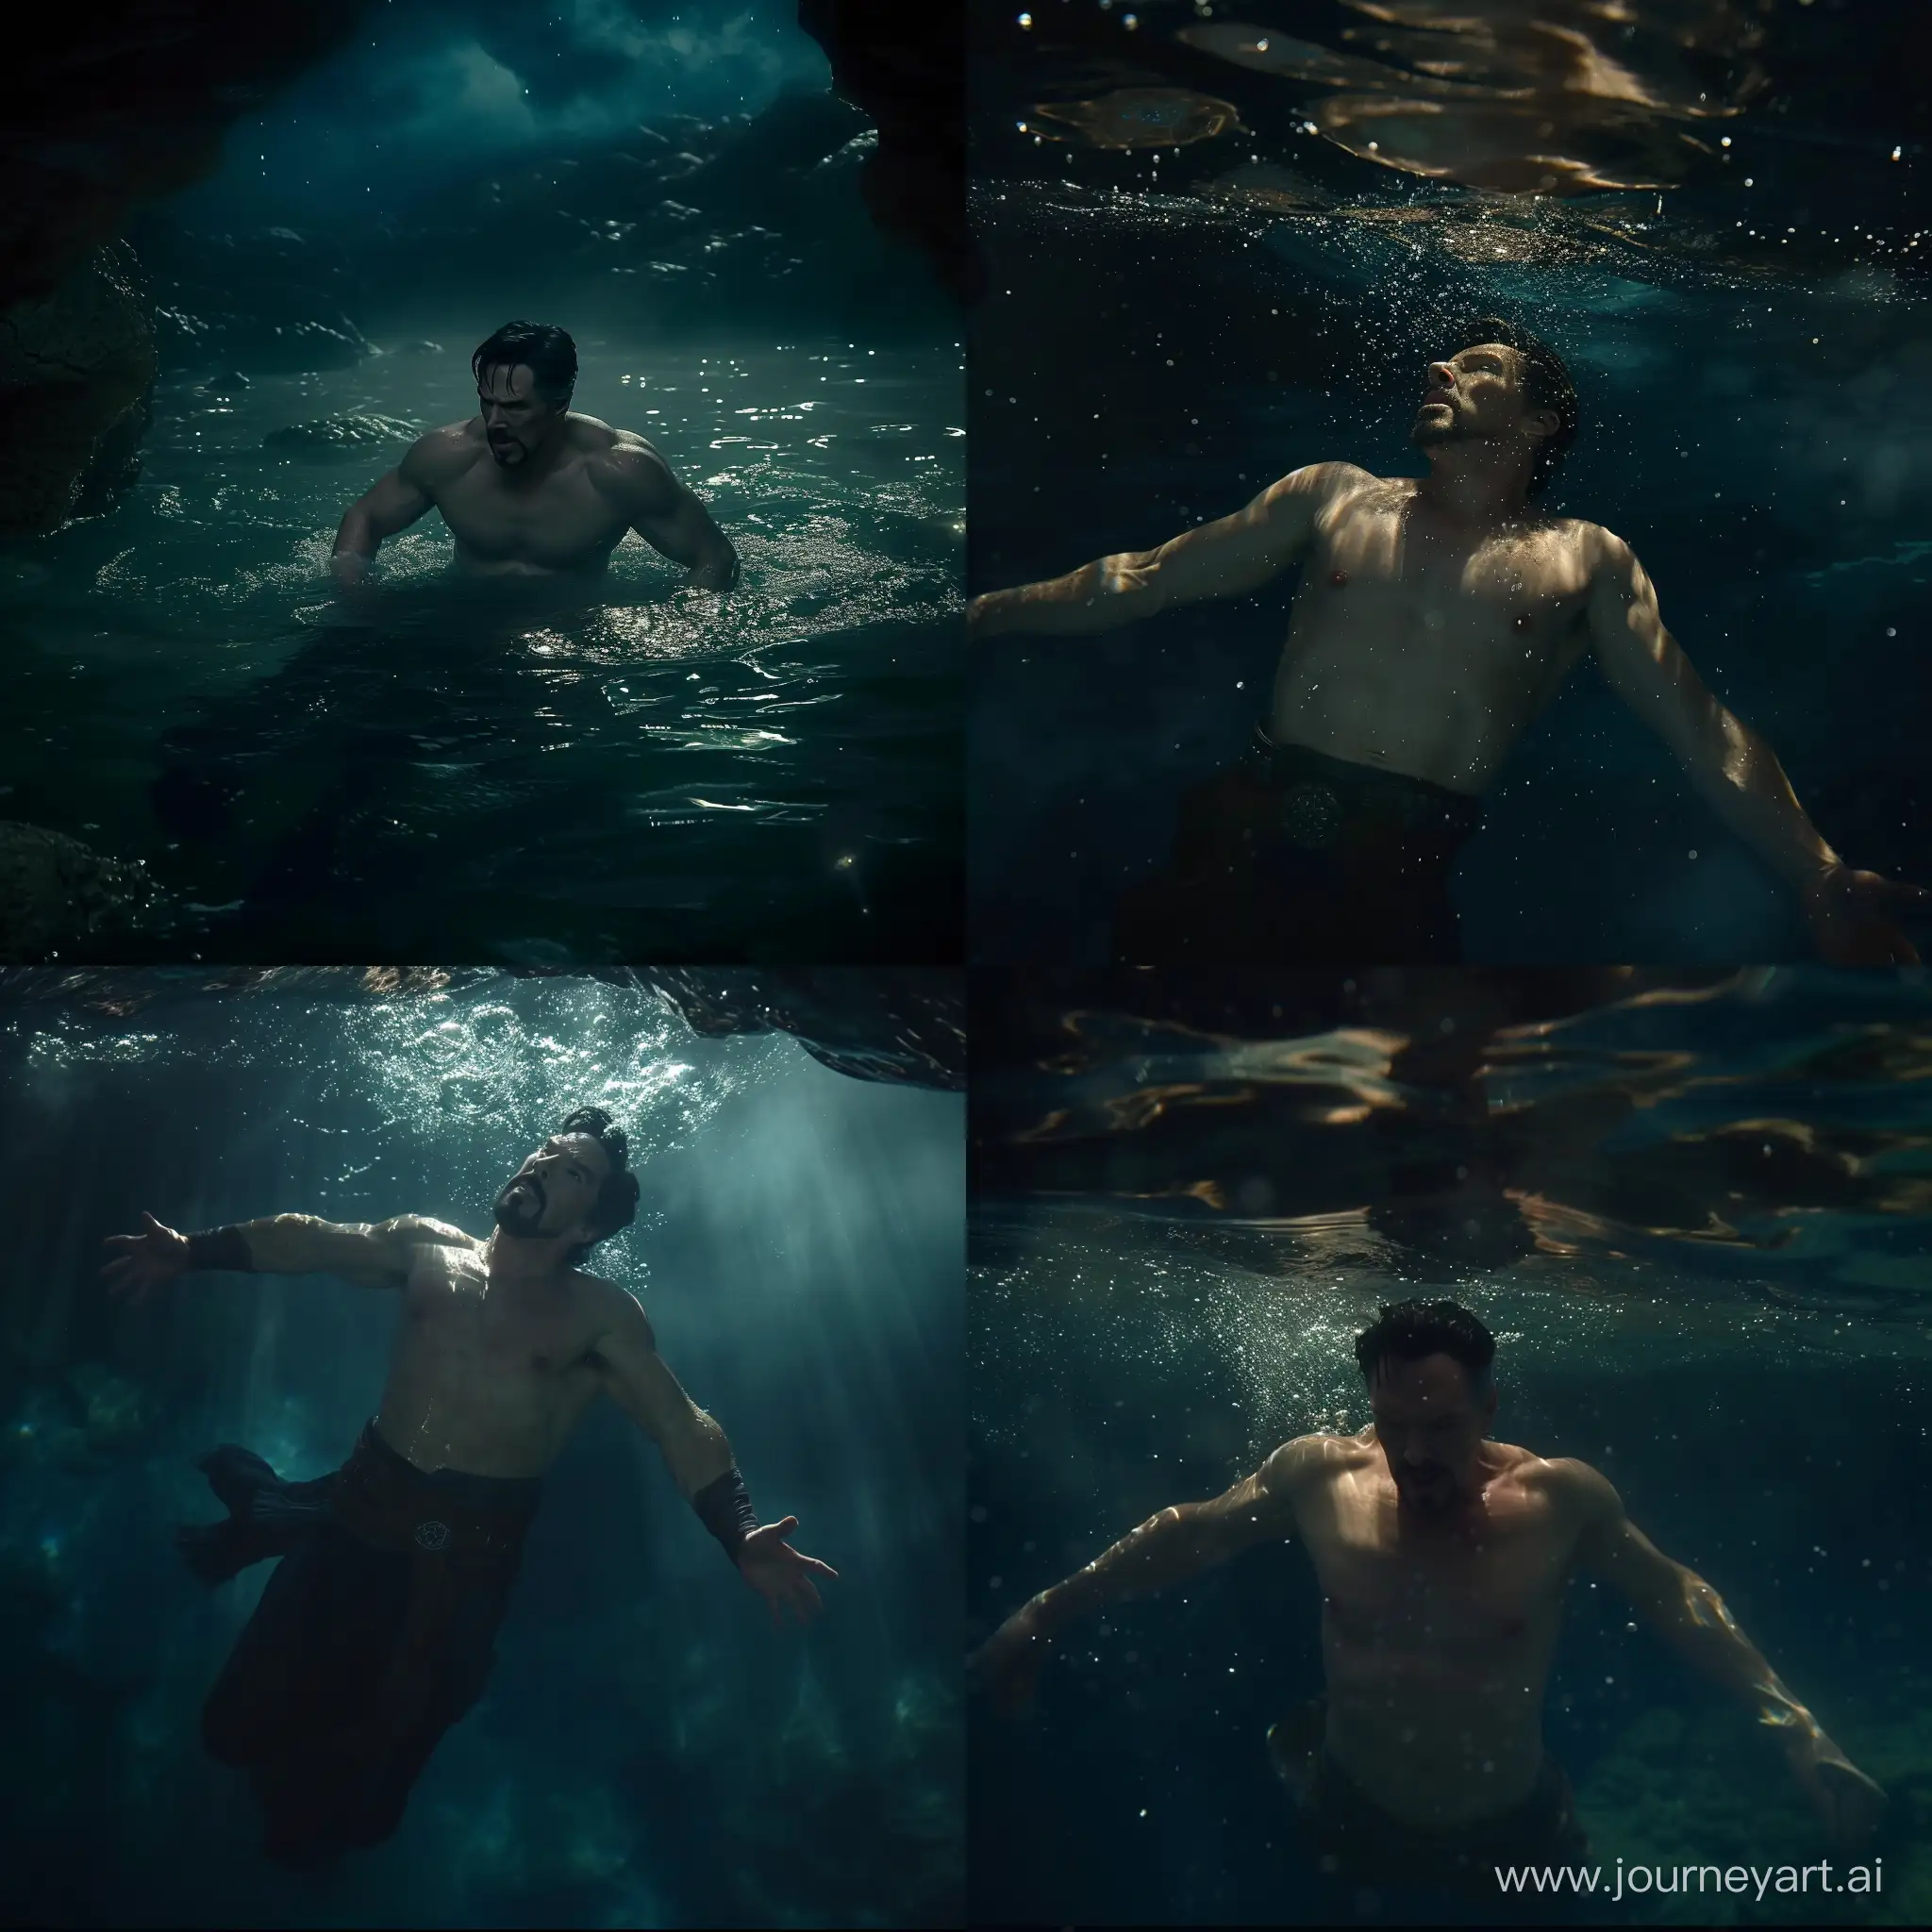 Doctor Strange swimming in the sea, shirtless, at night